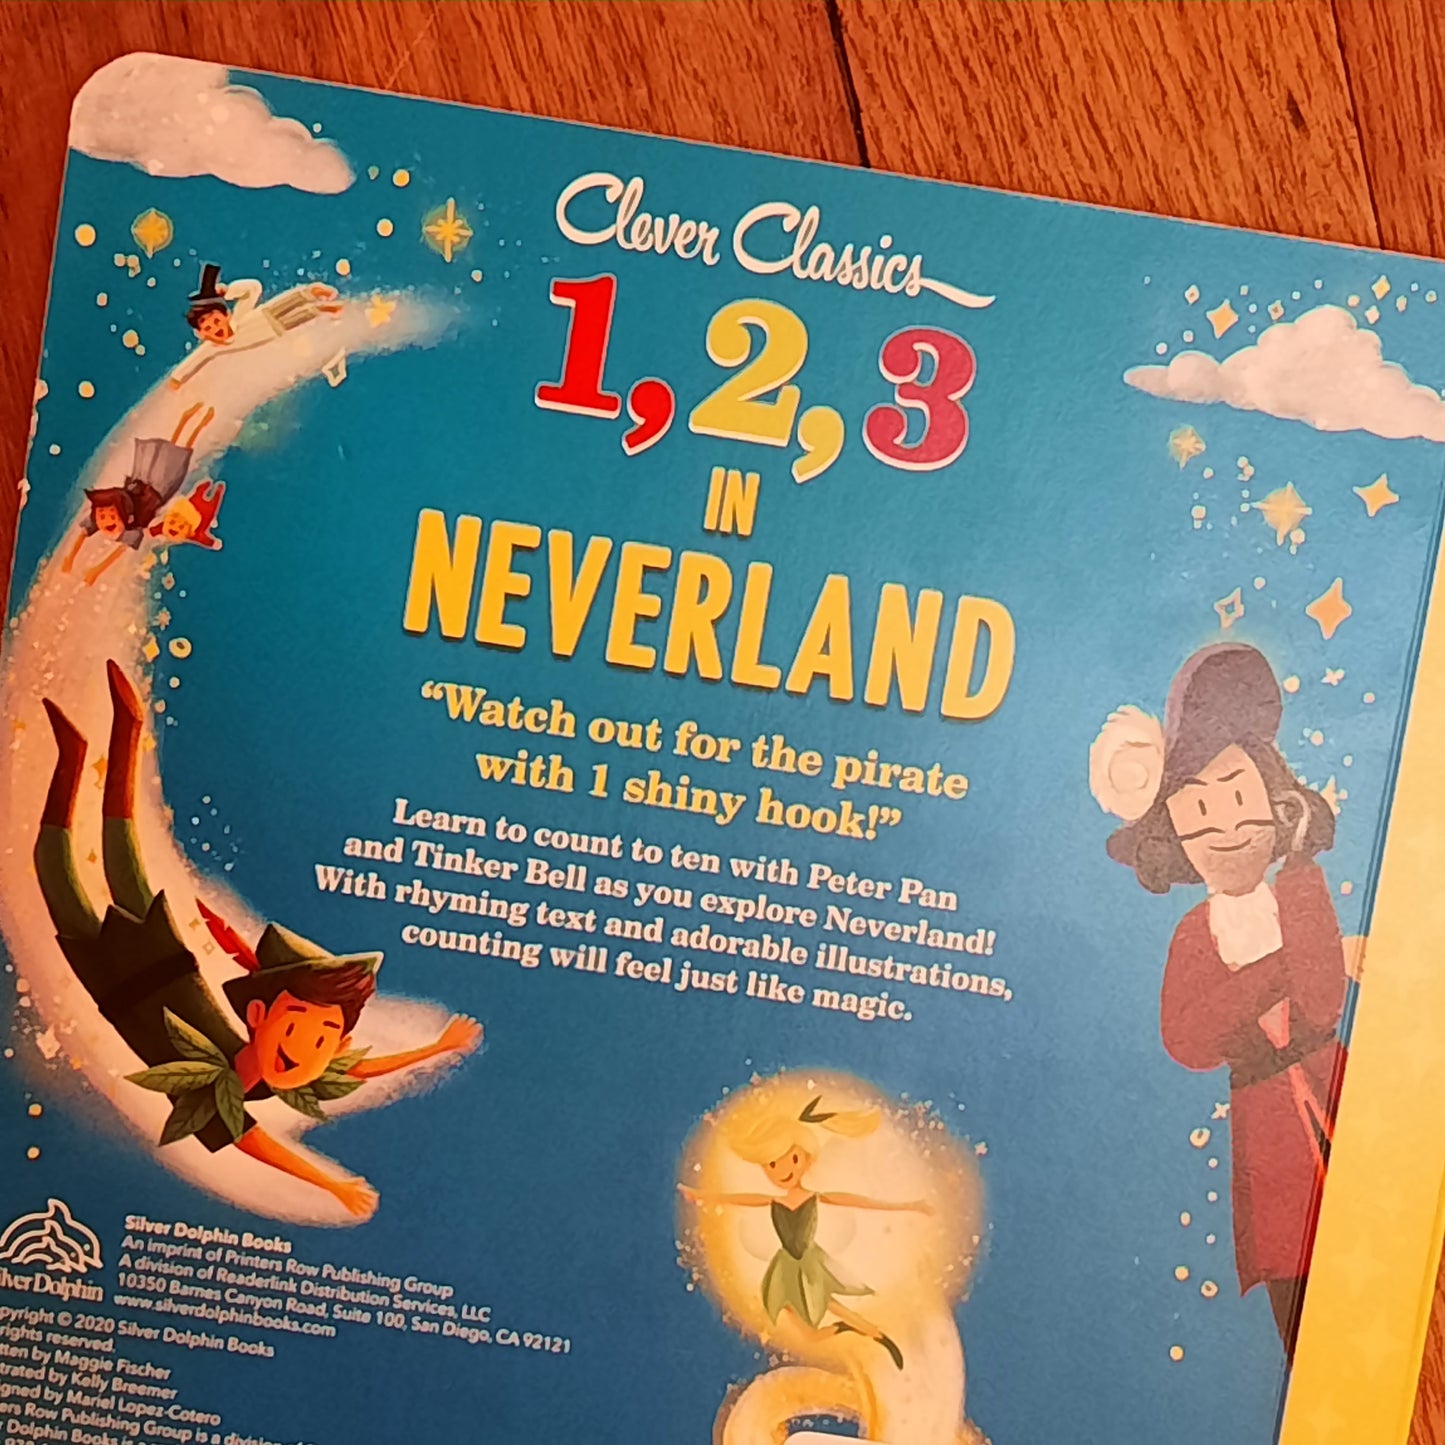 1, 2, 3 in Neverland Board Book